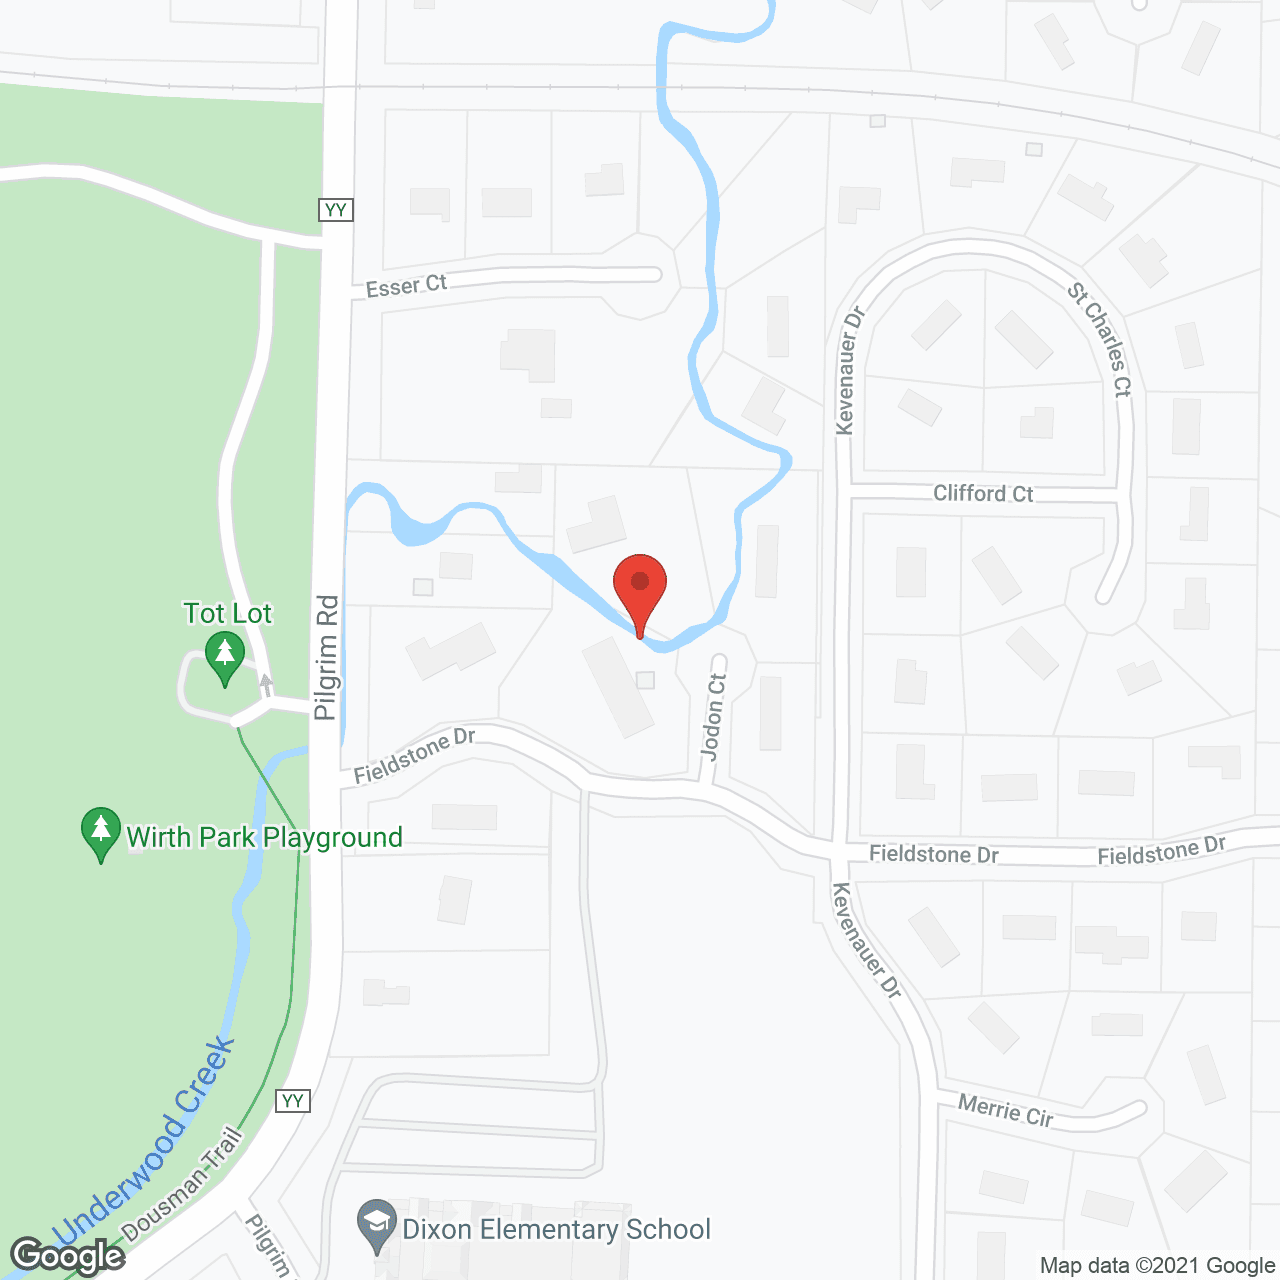 Heartis Village of Brookfield in google map